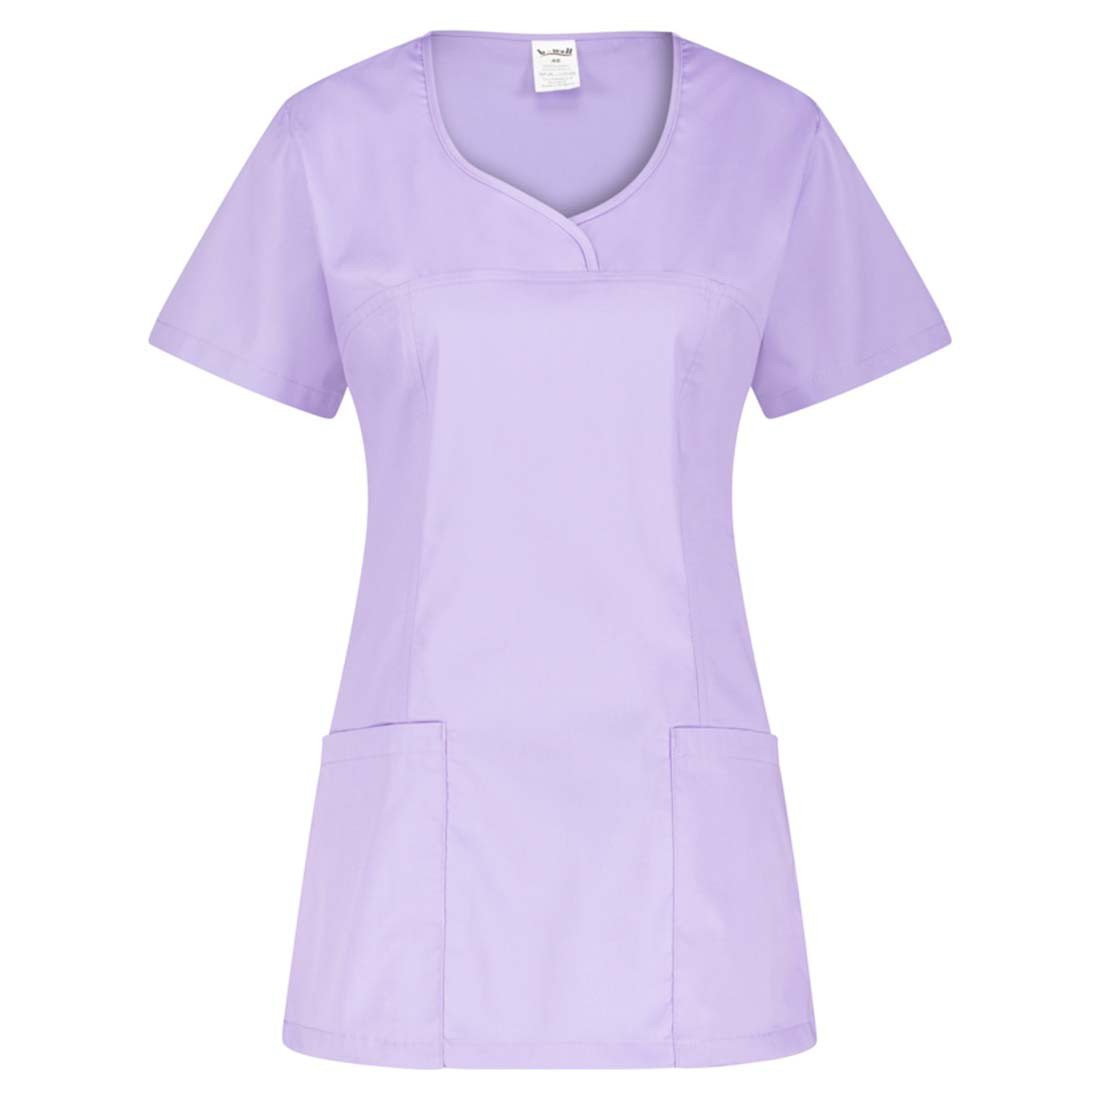 INES Damen Medizinische Tunika - Arbeitskleidung